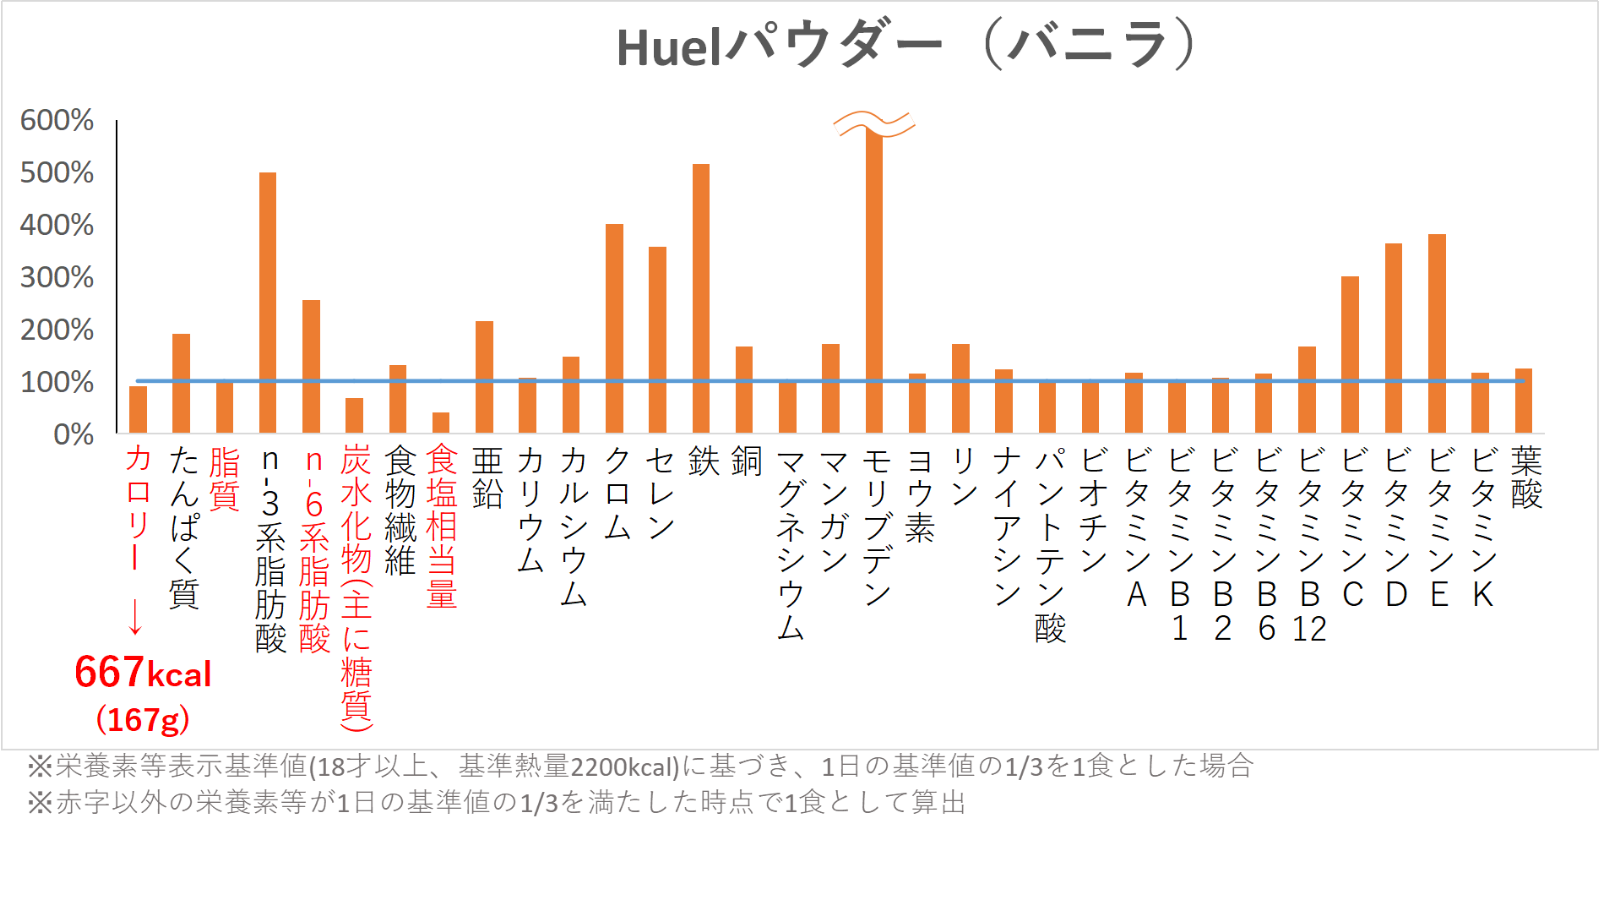 Huelパウダー（バニラ）栄養素グラフ